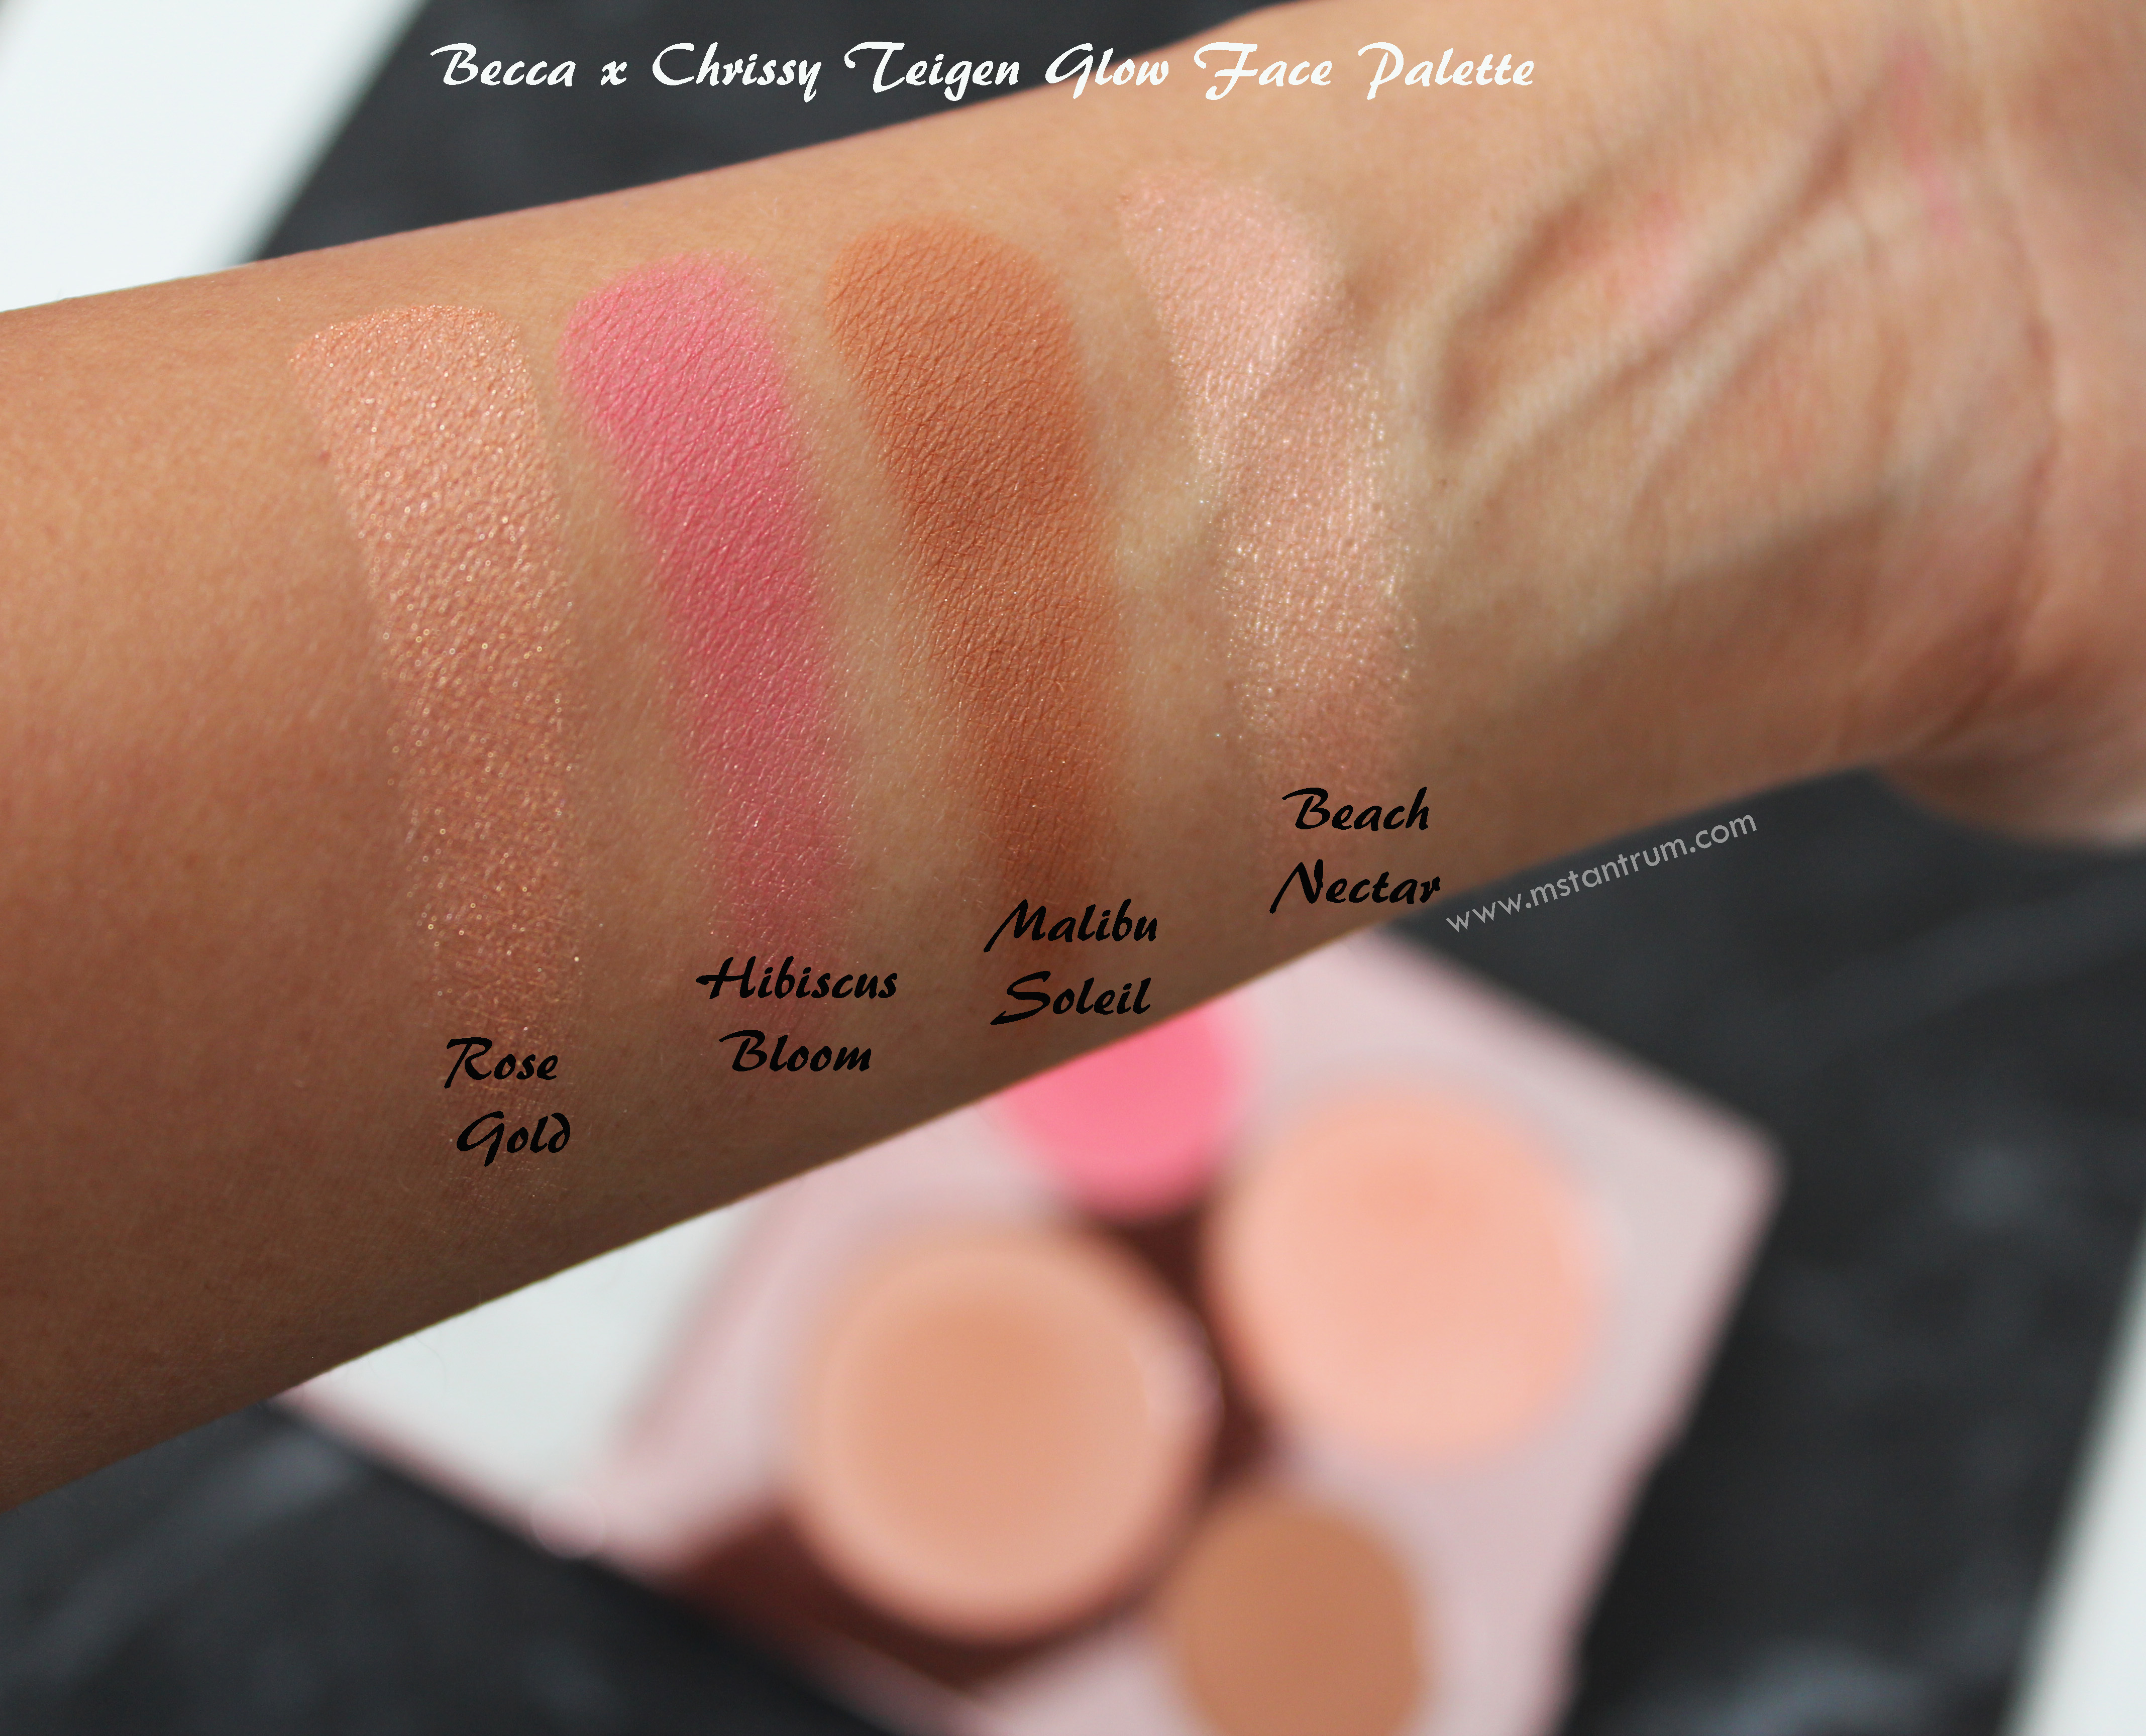 Becca Cosmetics x Chrissy Teigen Glow Face Palette